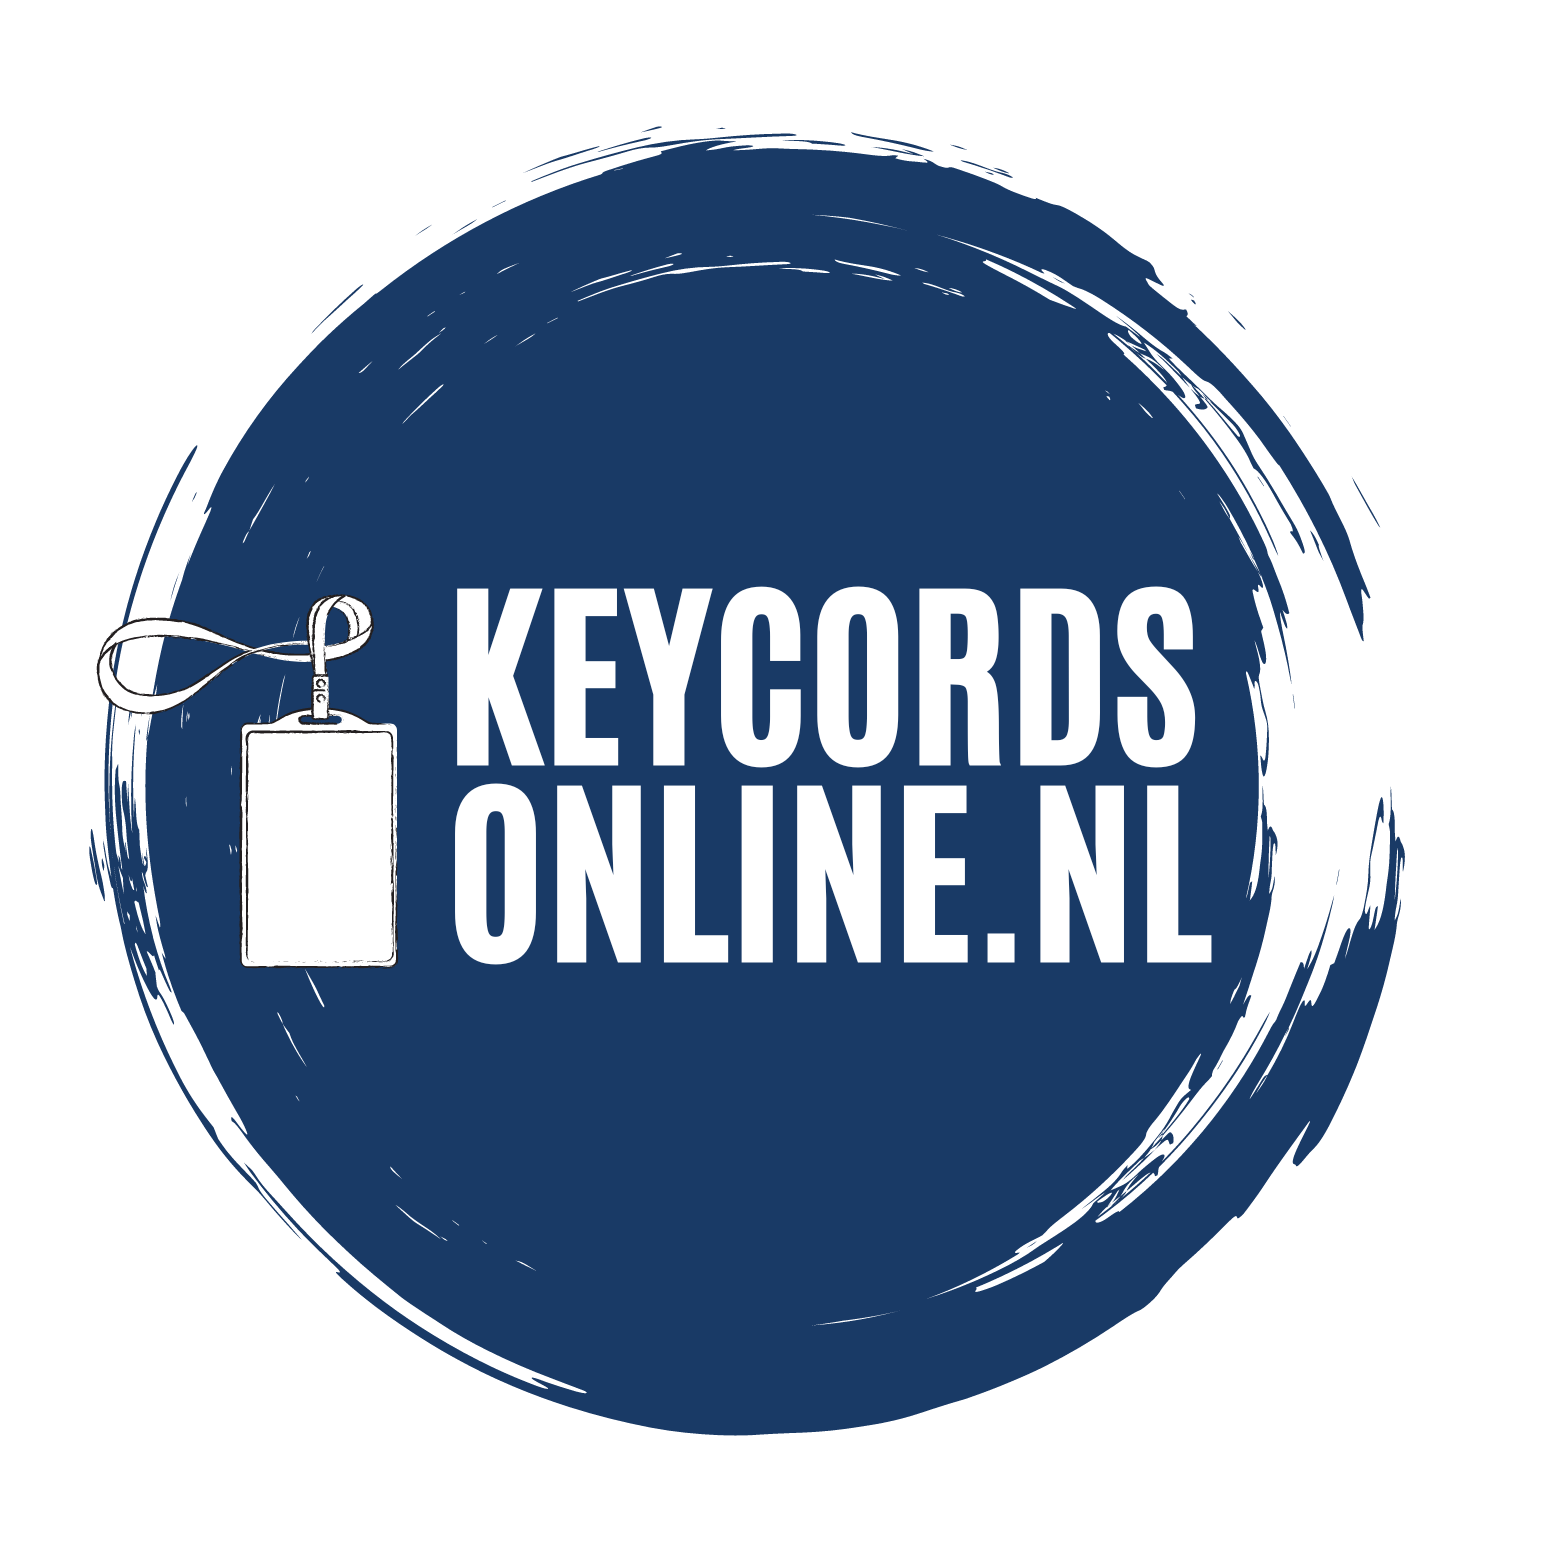 Keycords Online